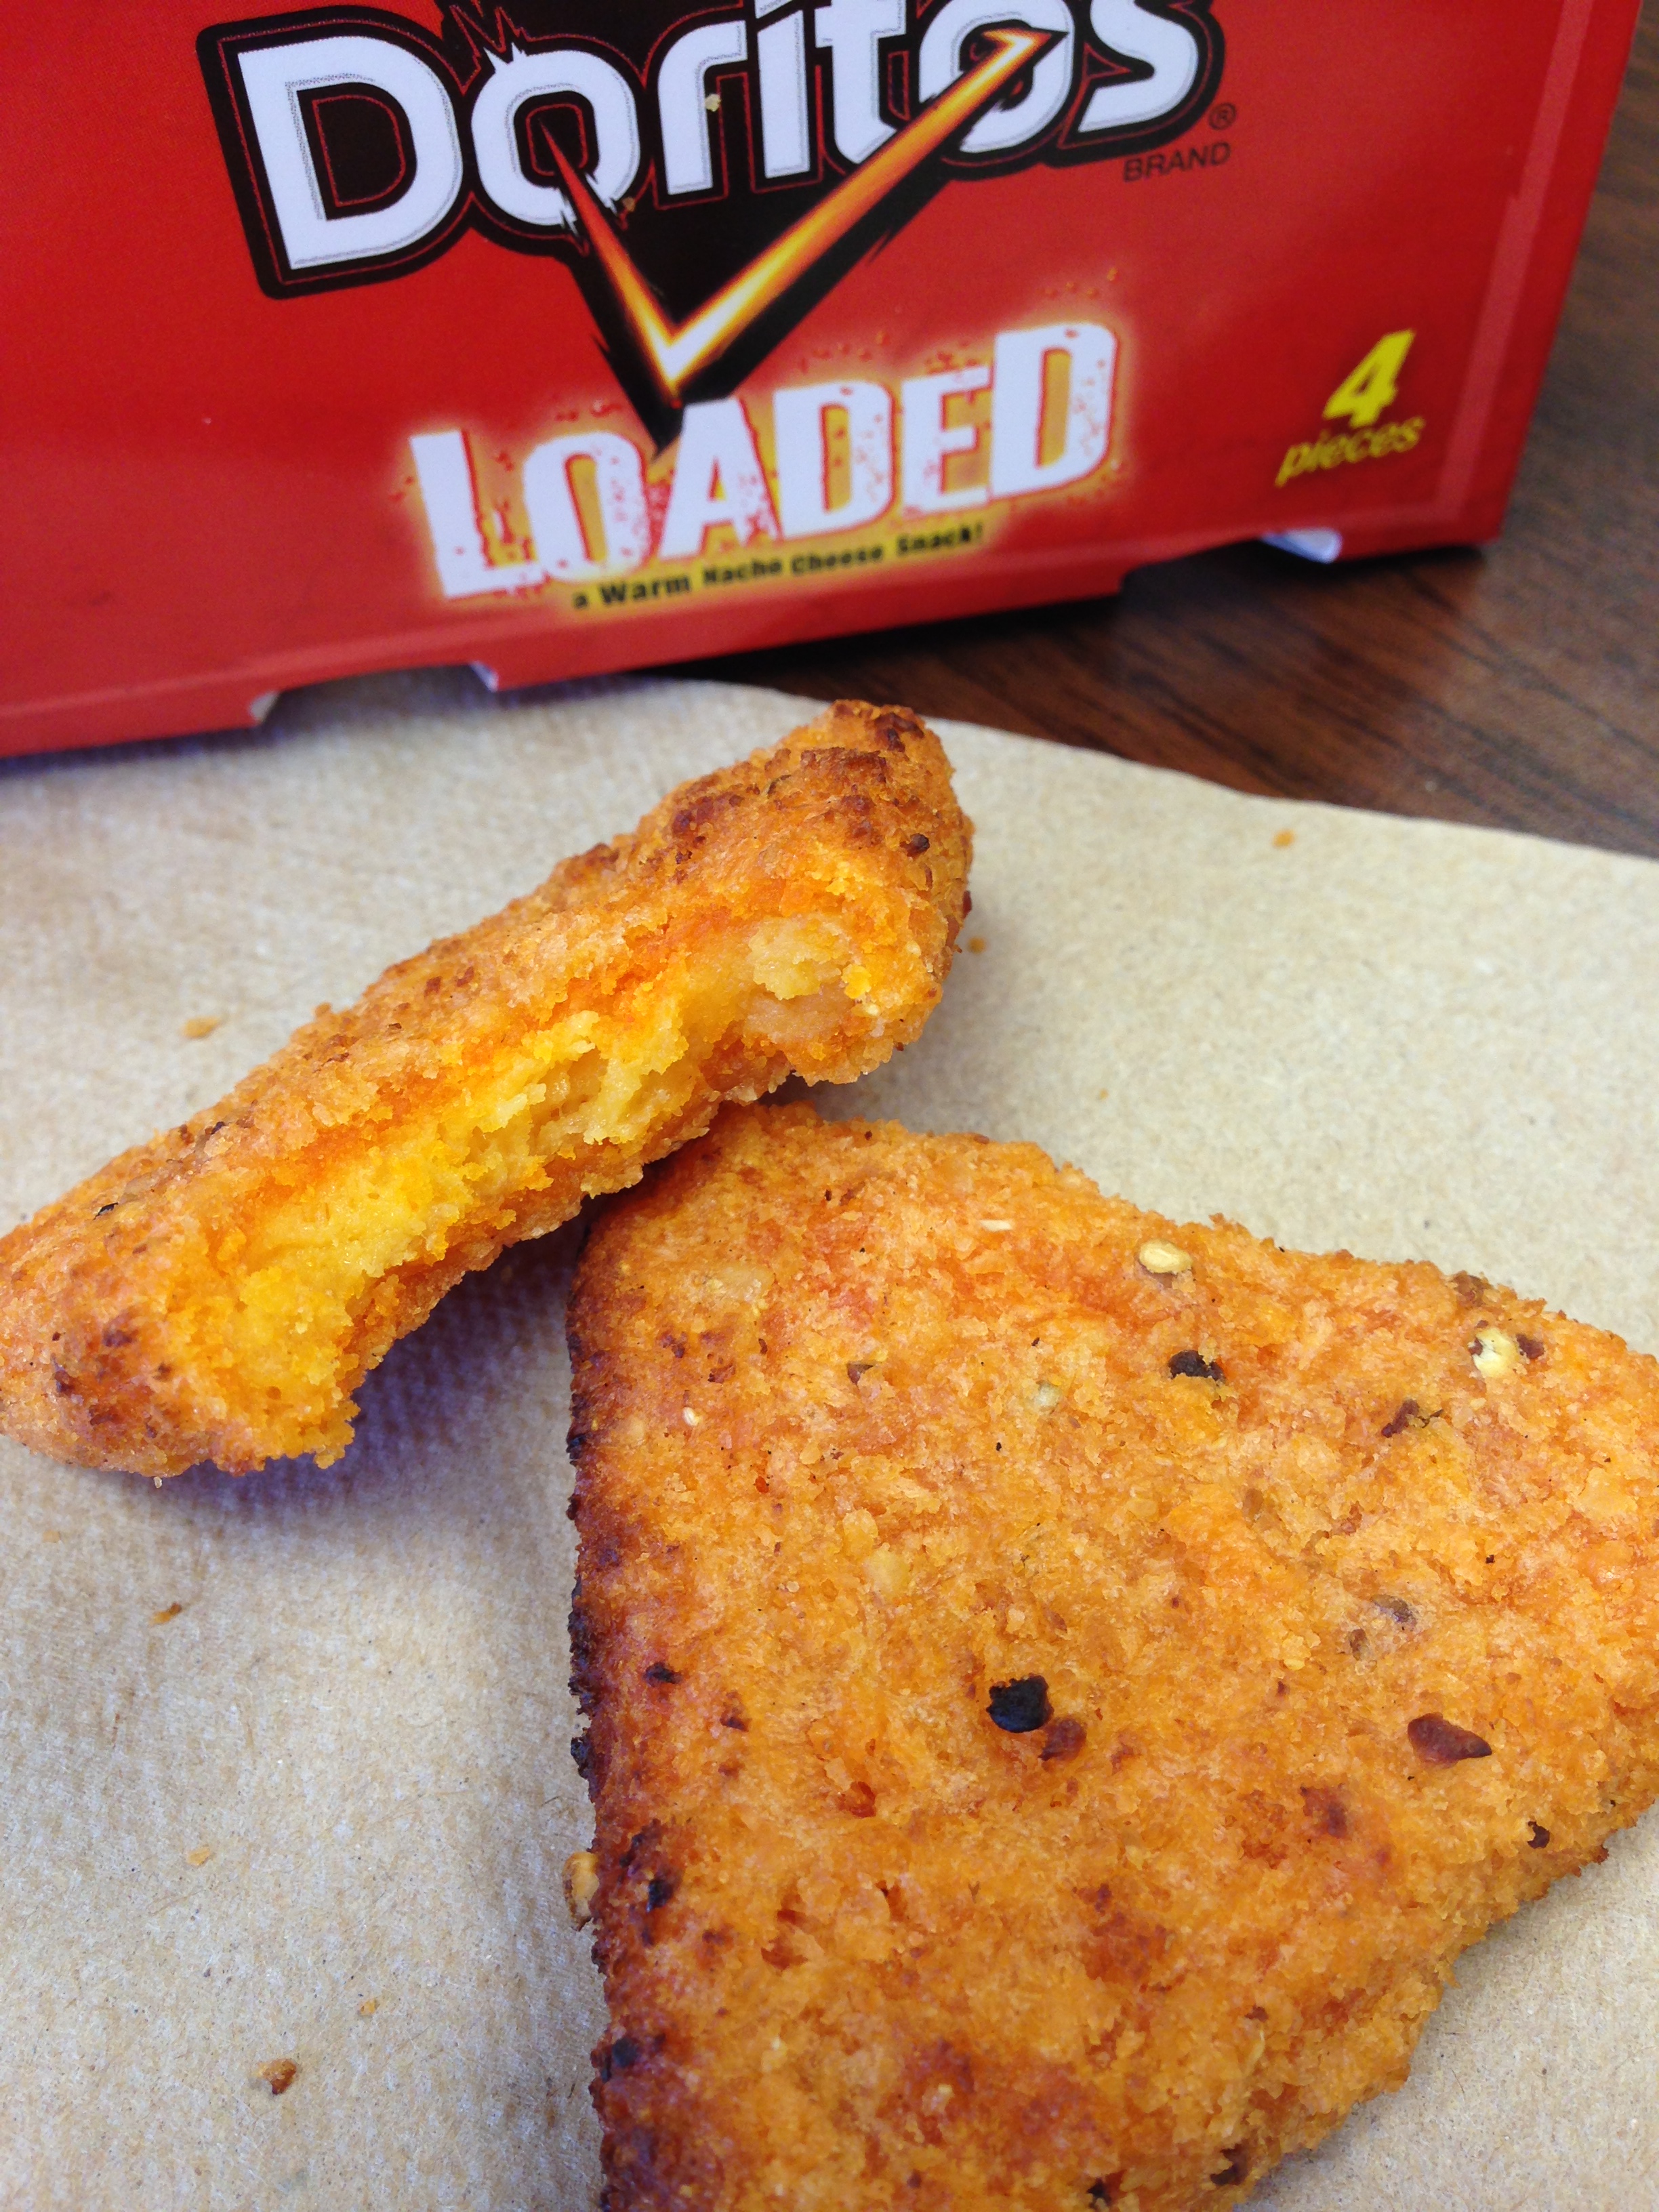 The Doritos Loaded Taste Test: Where Cheese Sticks And Doritos Go To Die